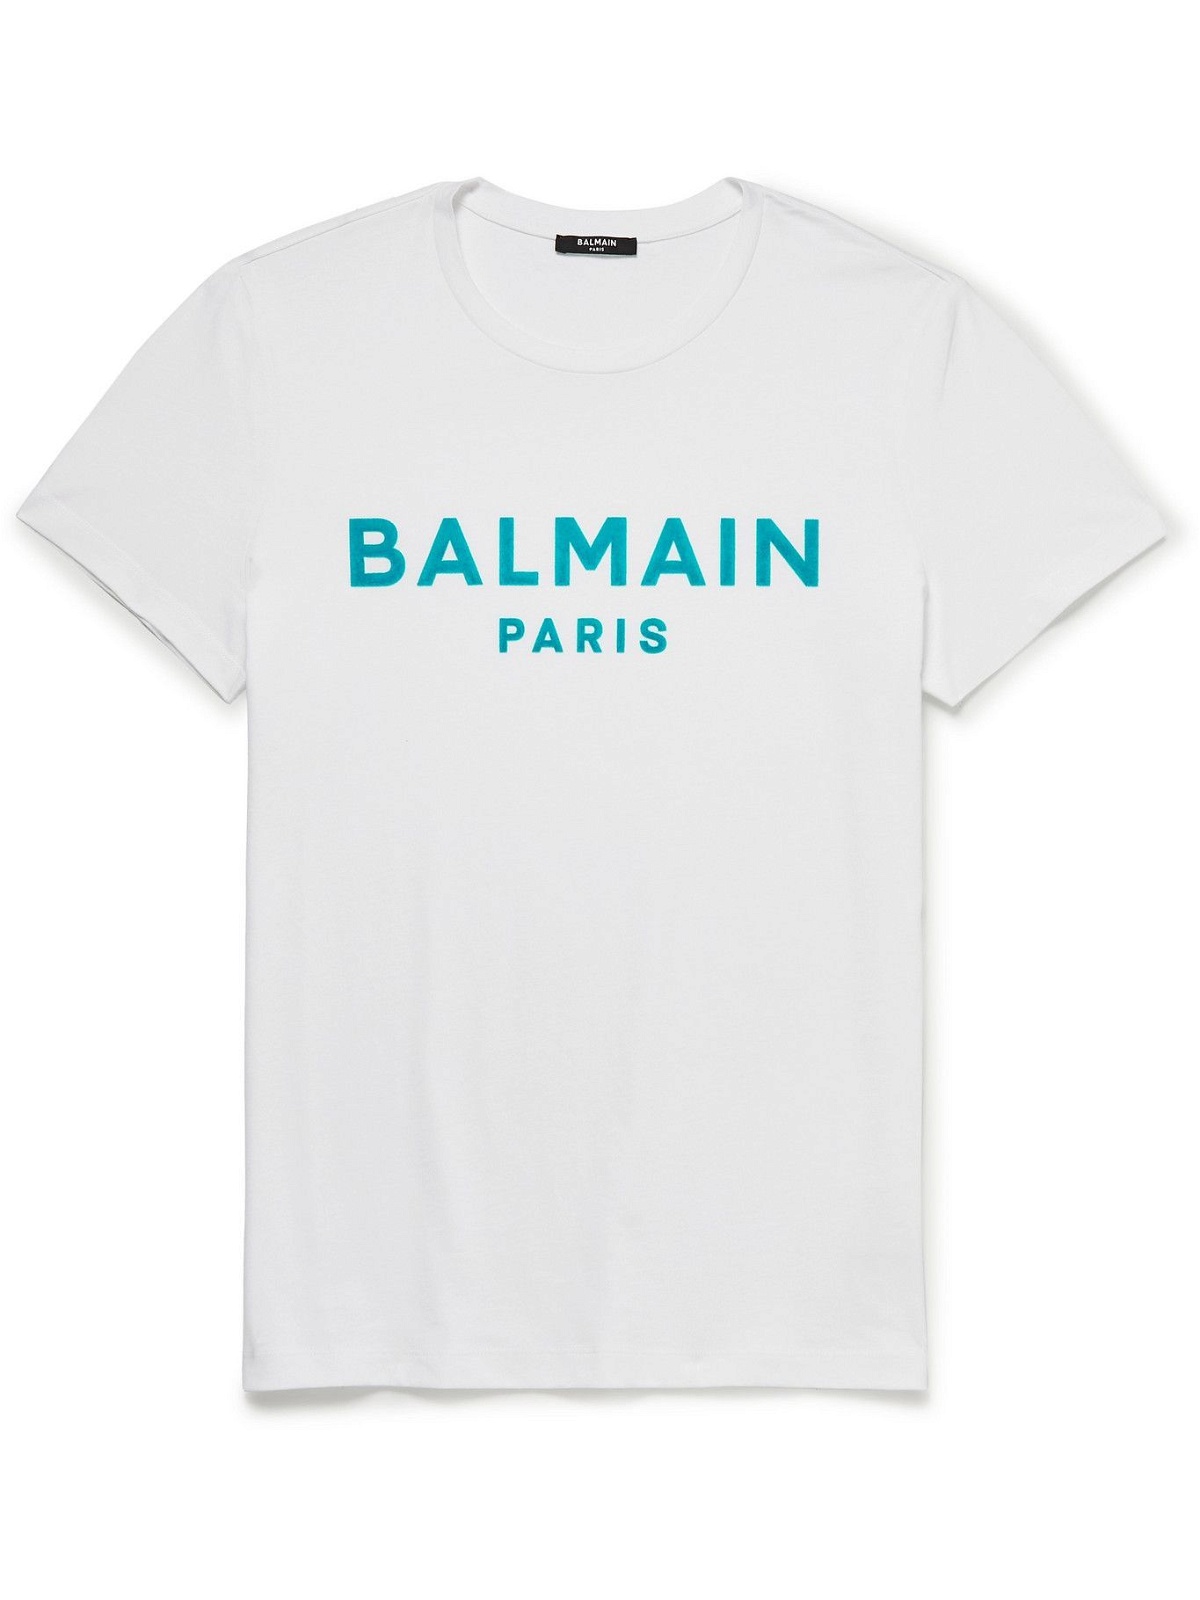 BALMAIN - Logo-Flocked Cotton-Jersey T-Shirt - White Balmain